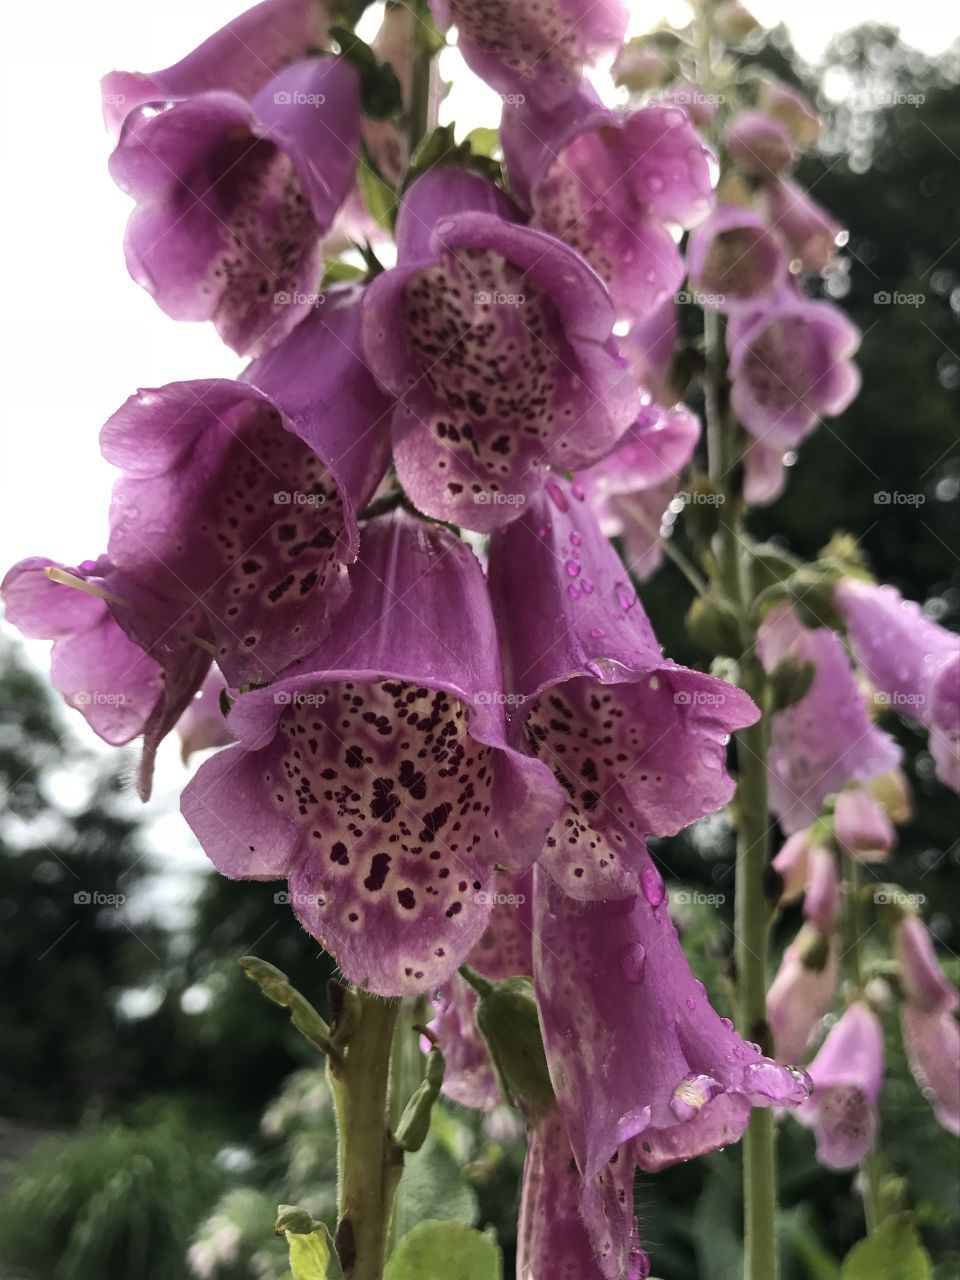 Close up view of purple foxglove flowers near a community garden in Brevard, NC